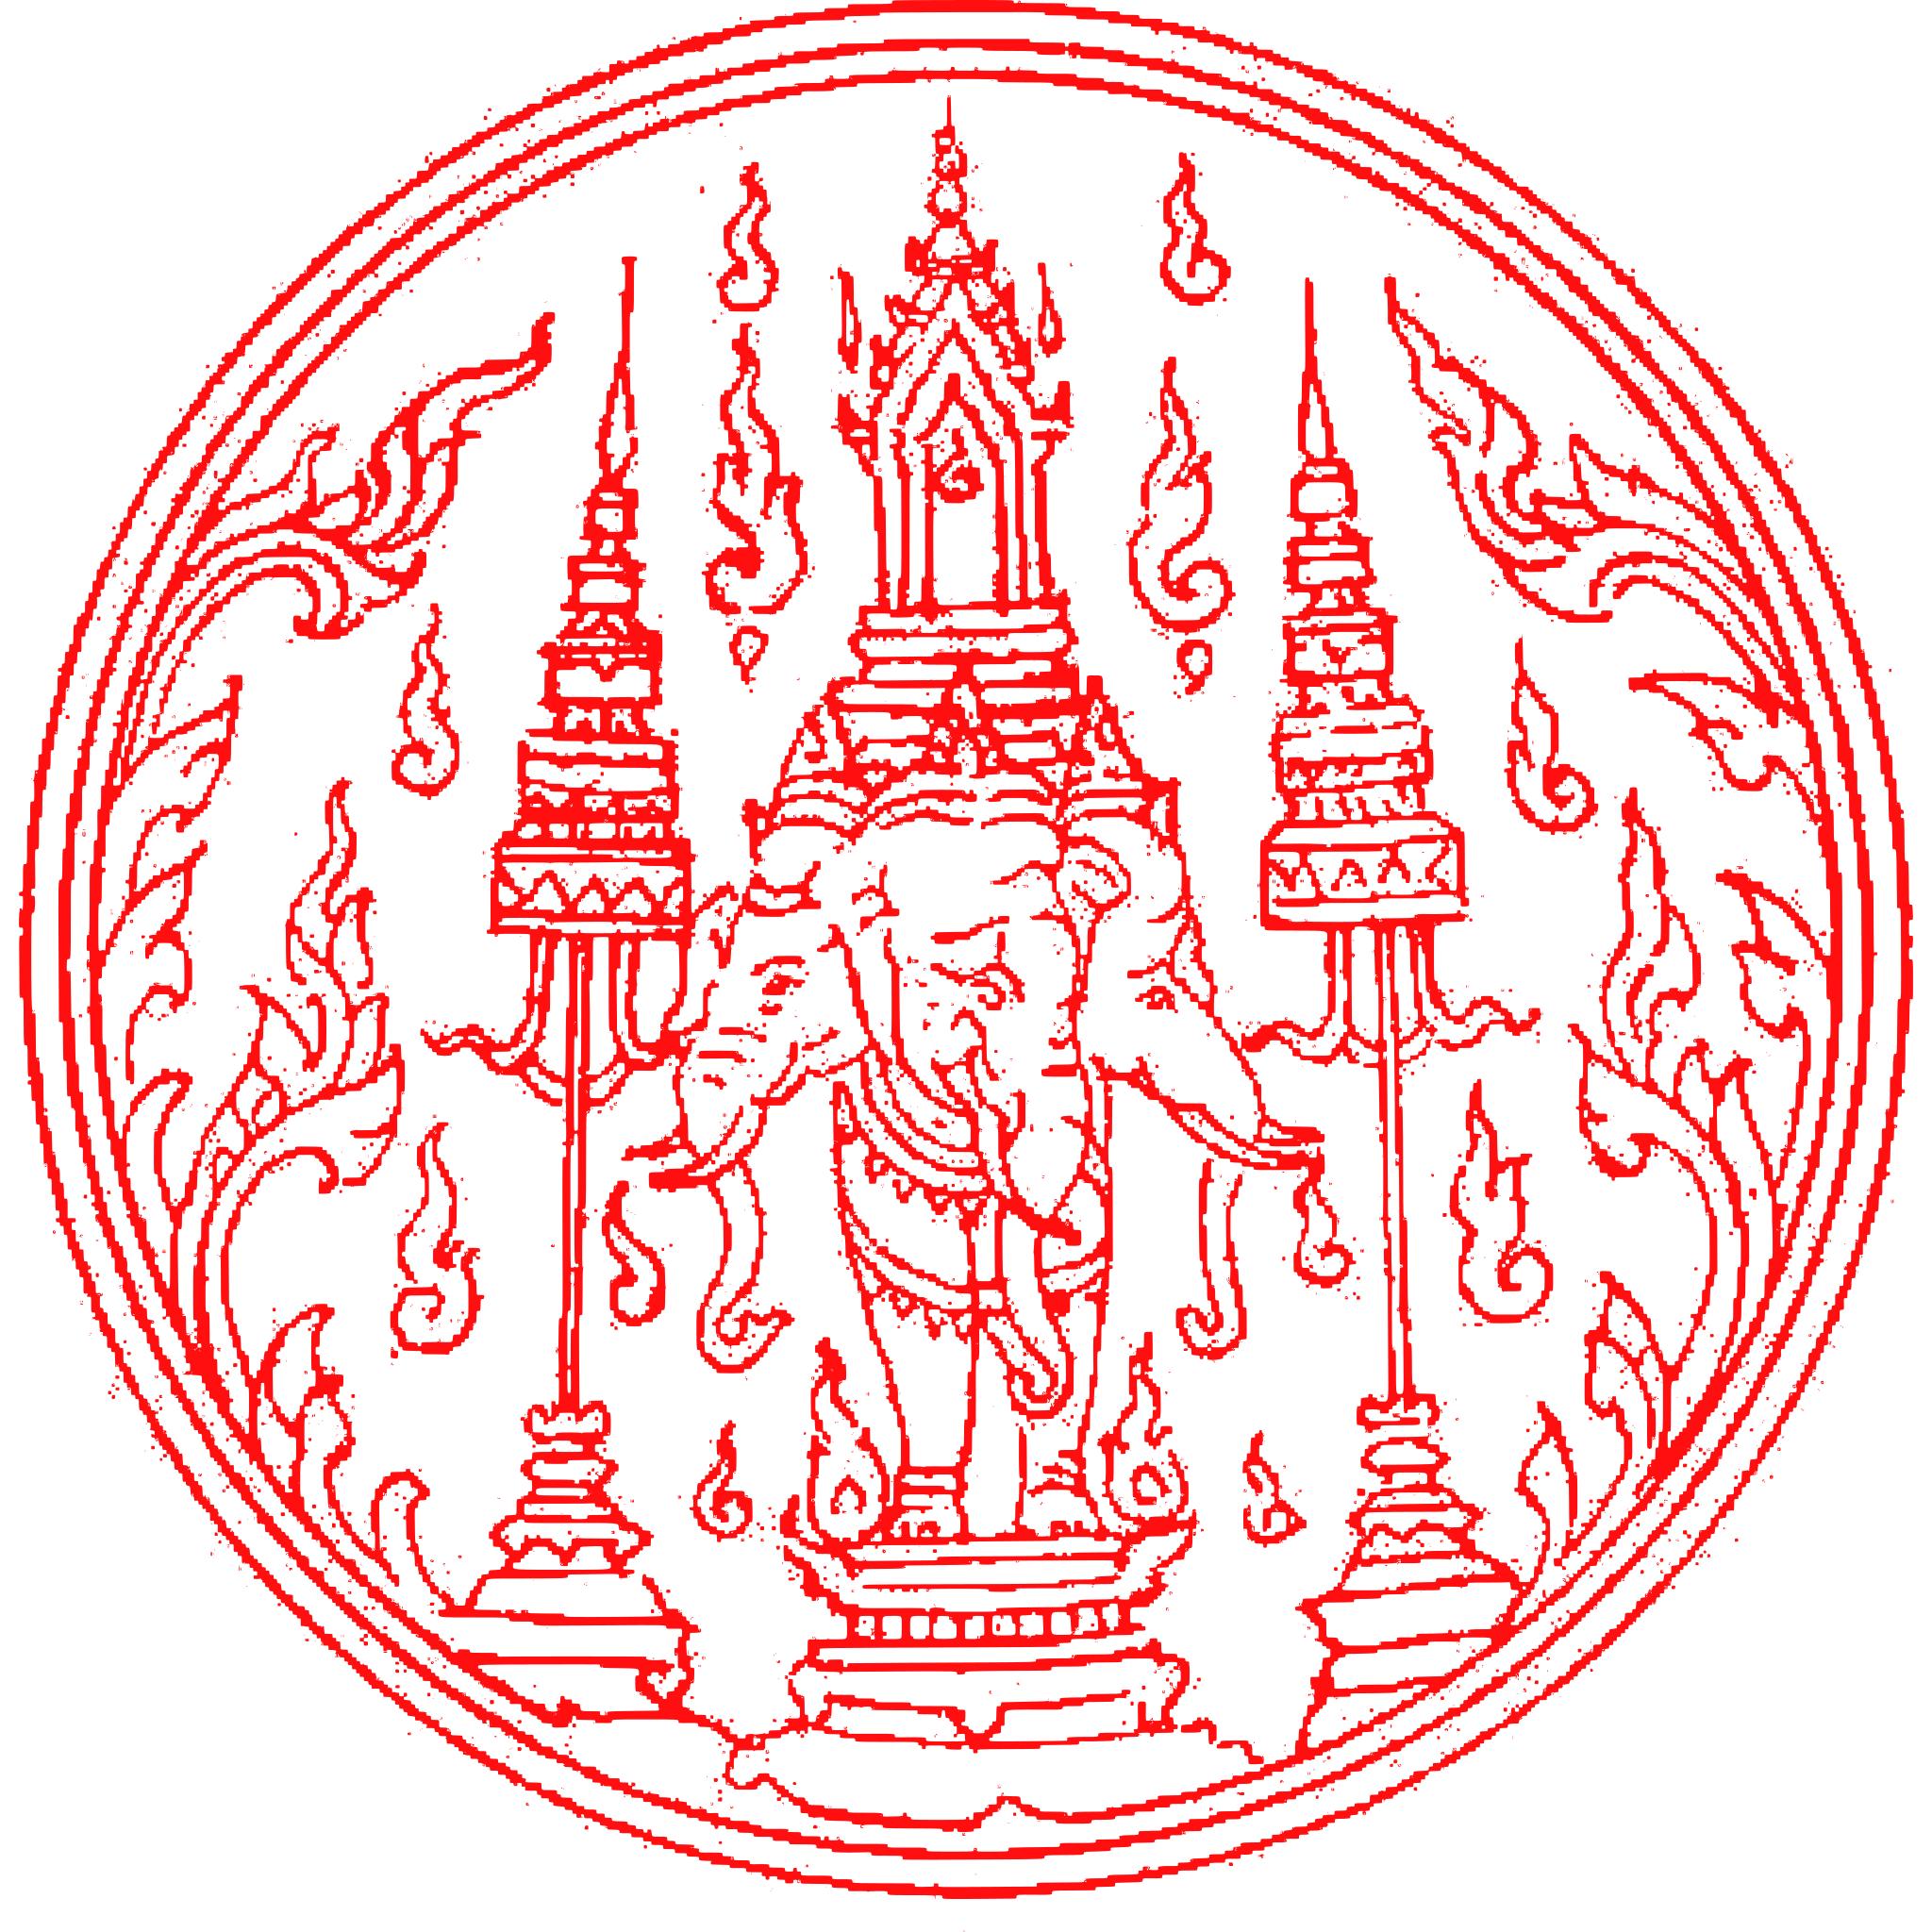 Герб Таиланда